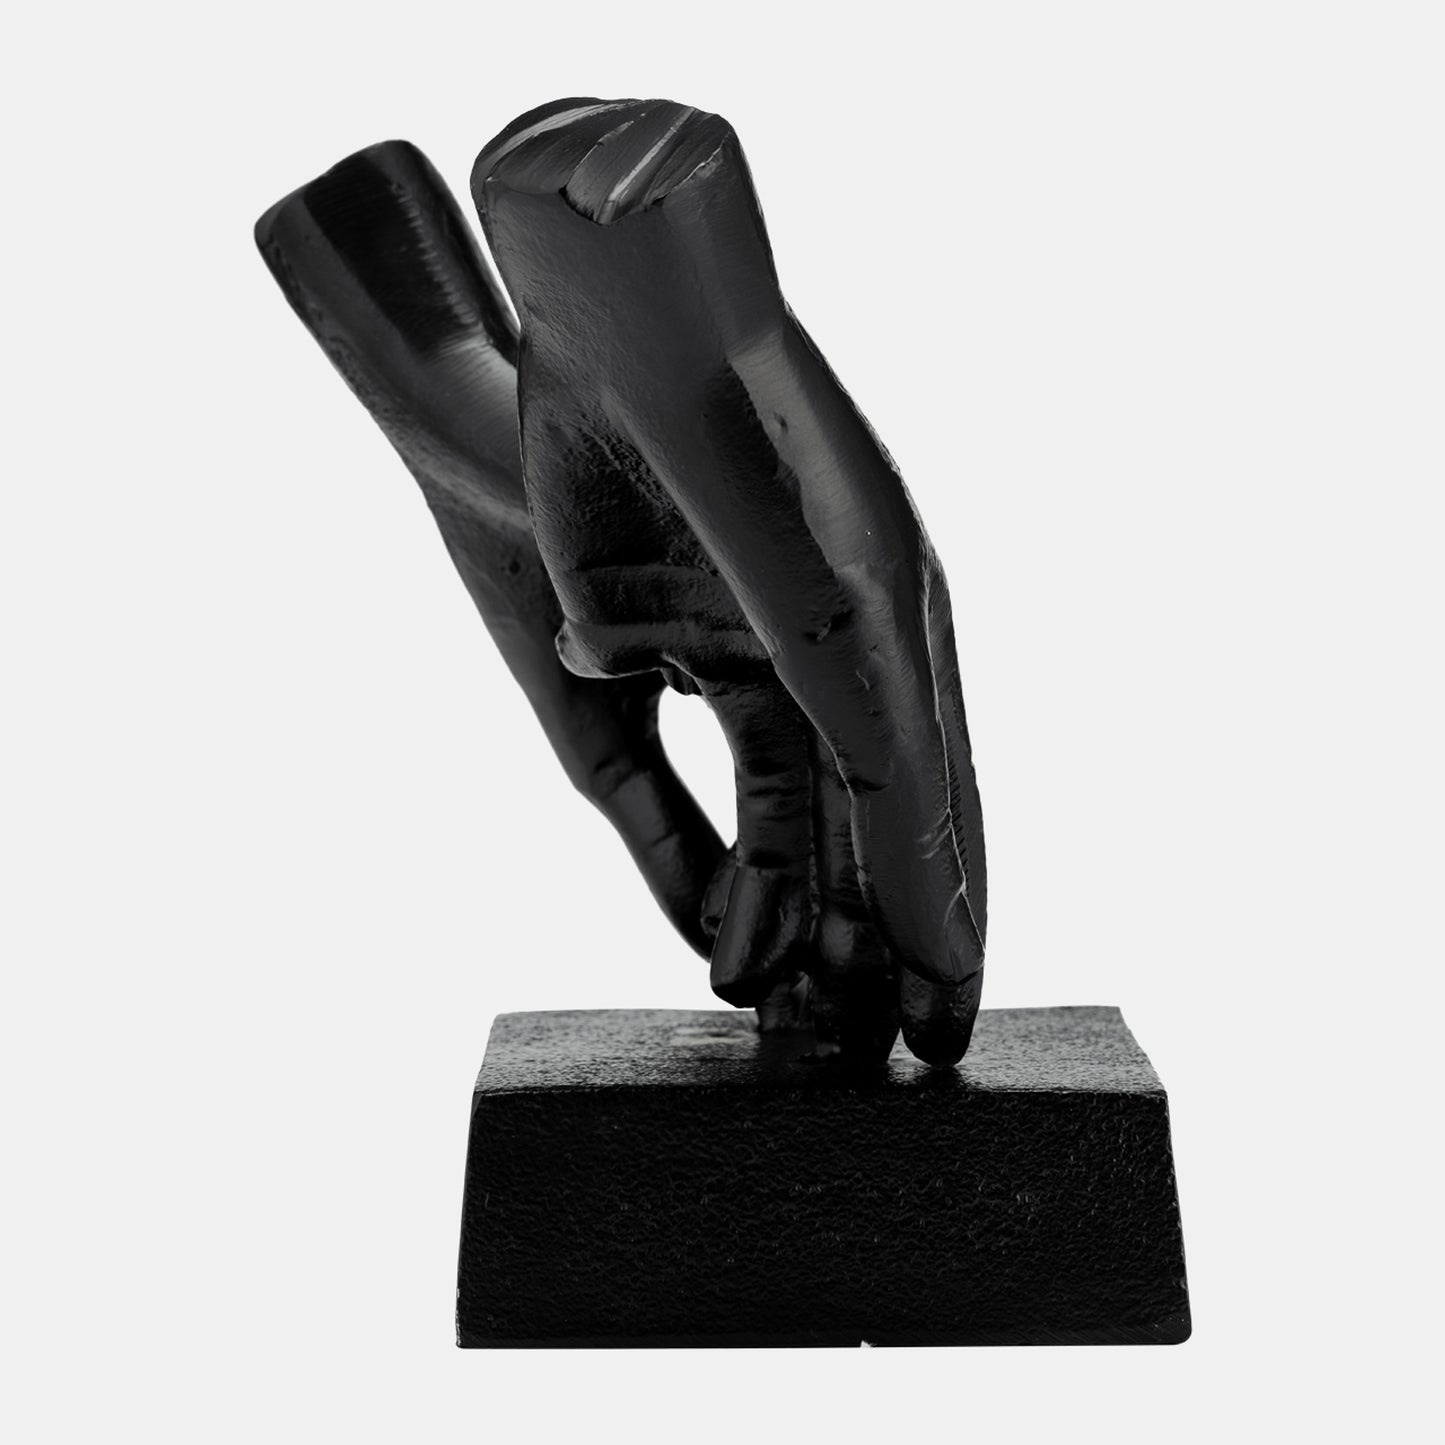 11 Inch Metal Entwined Hands Sculpture - Black